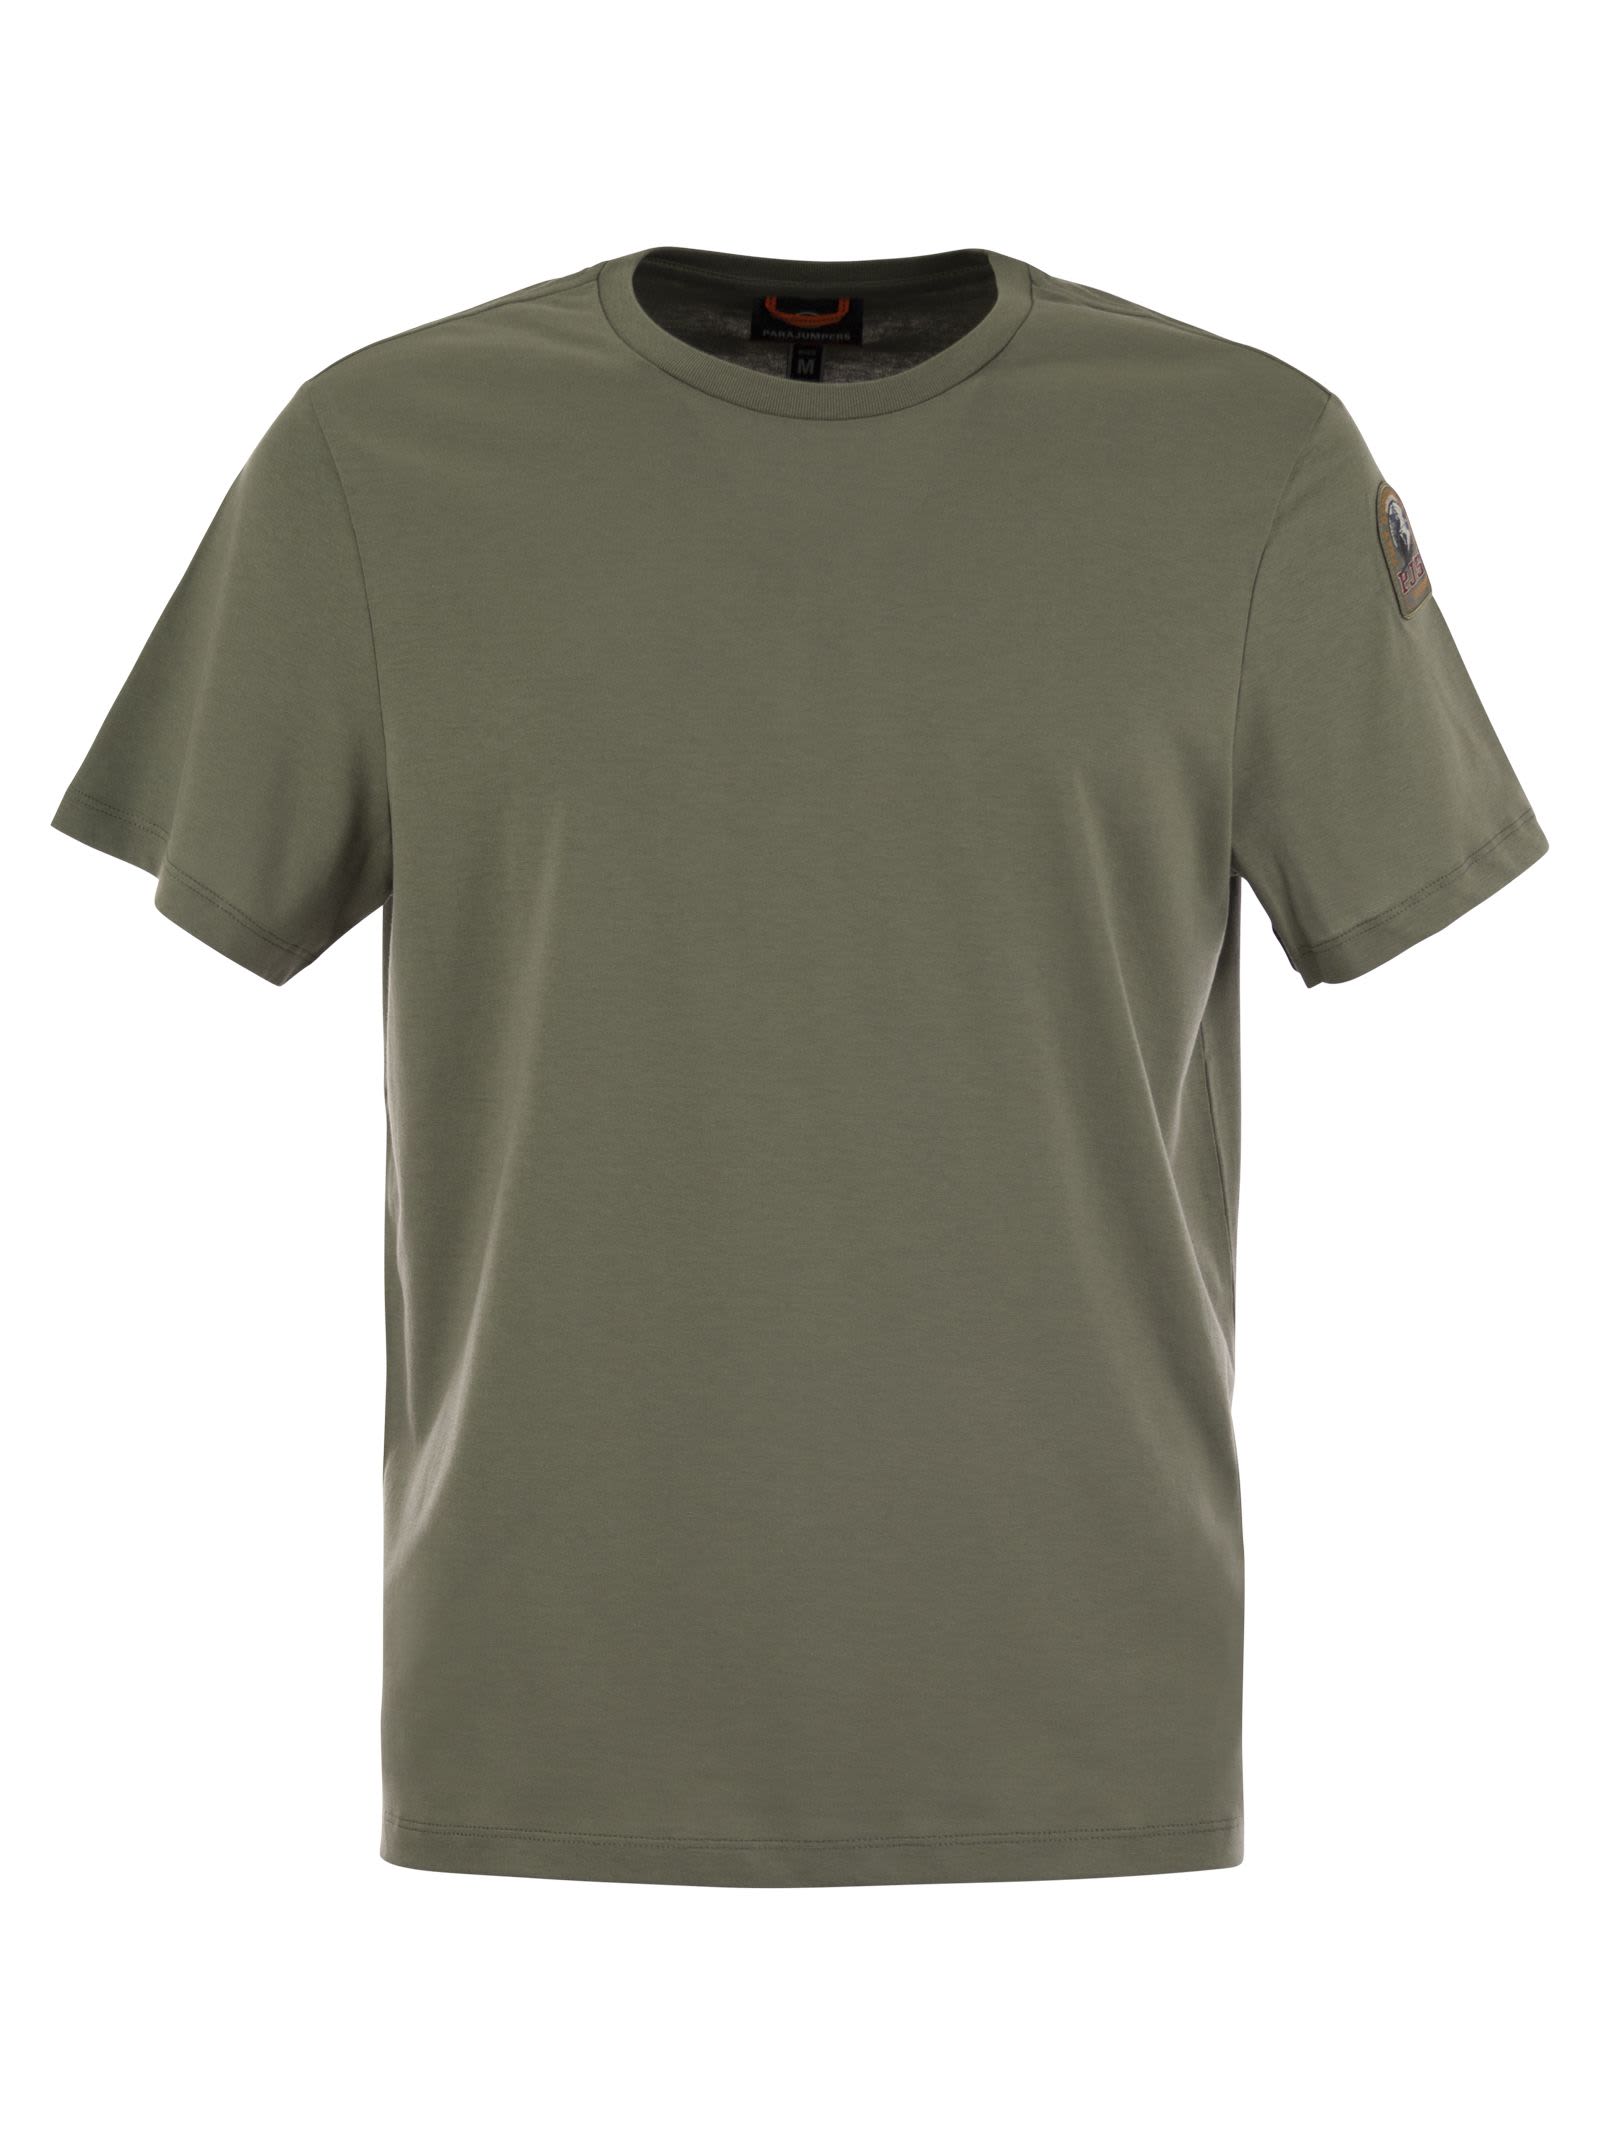 Shispare Tee - Cotton Jersey T-shirt